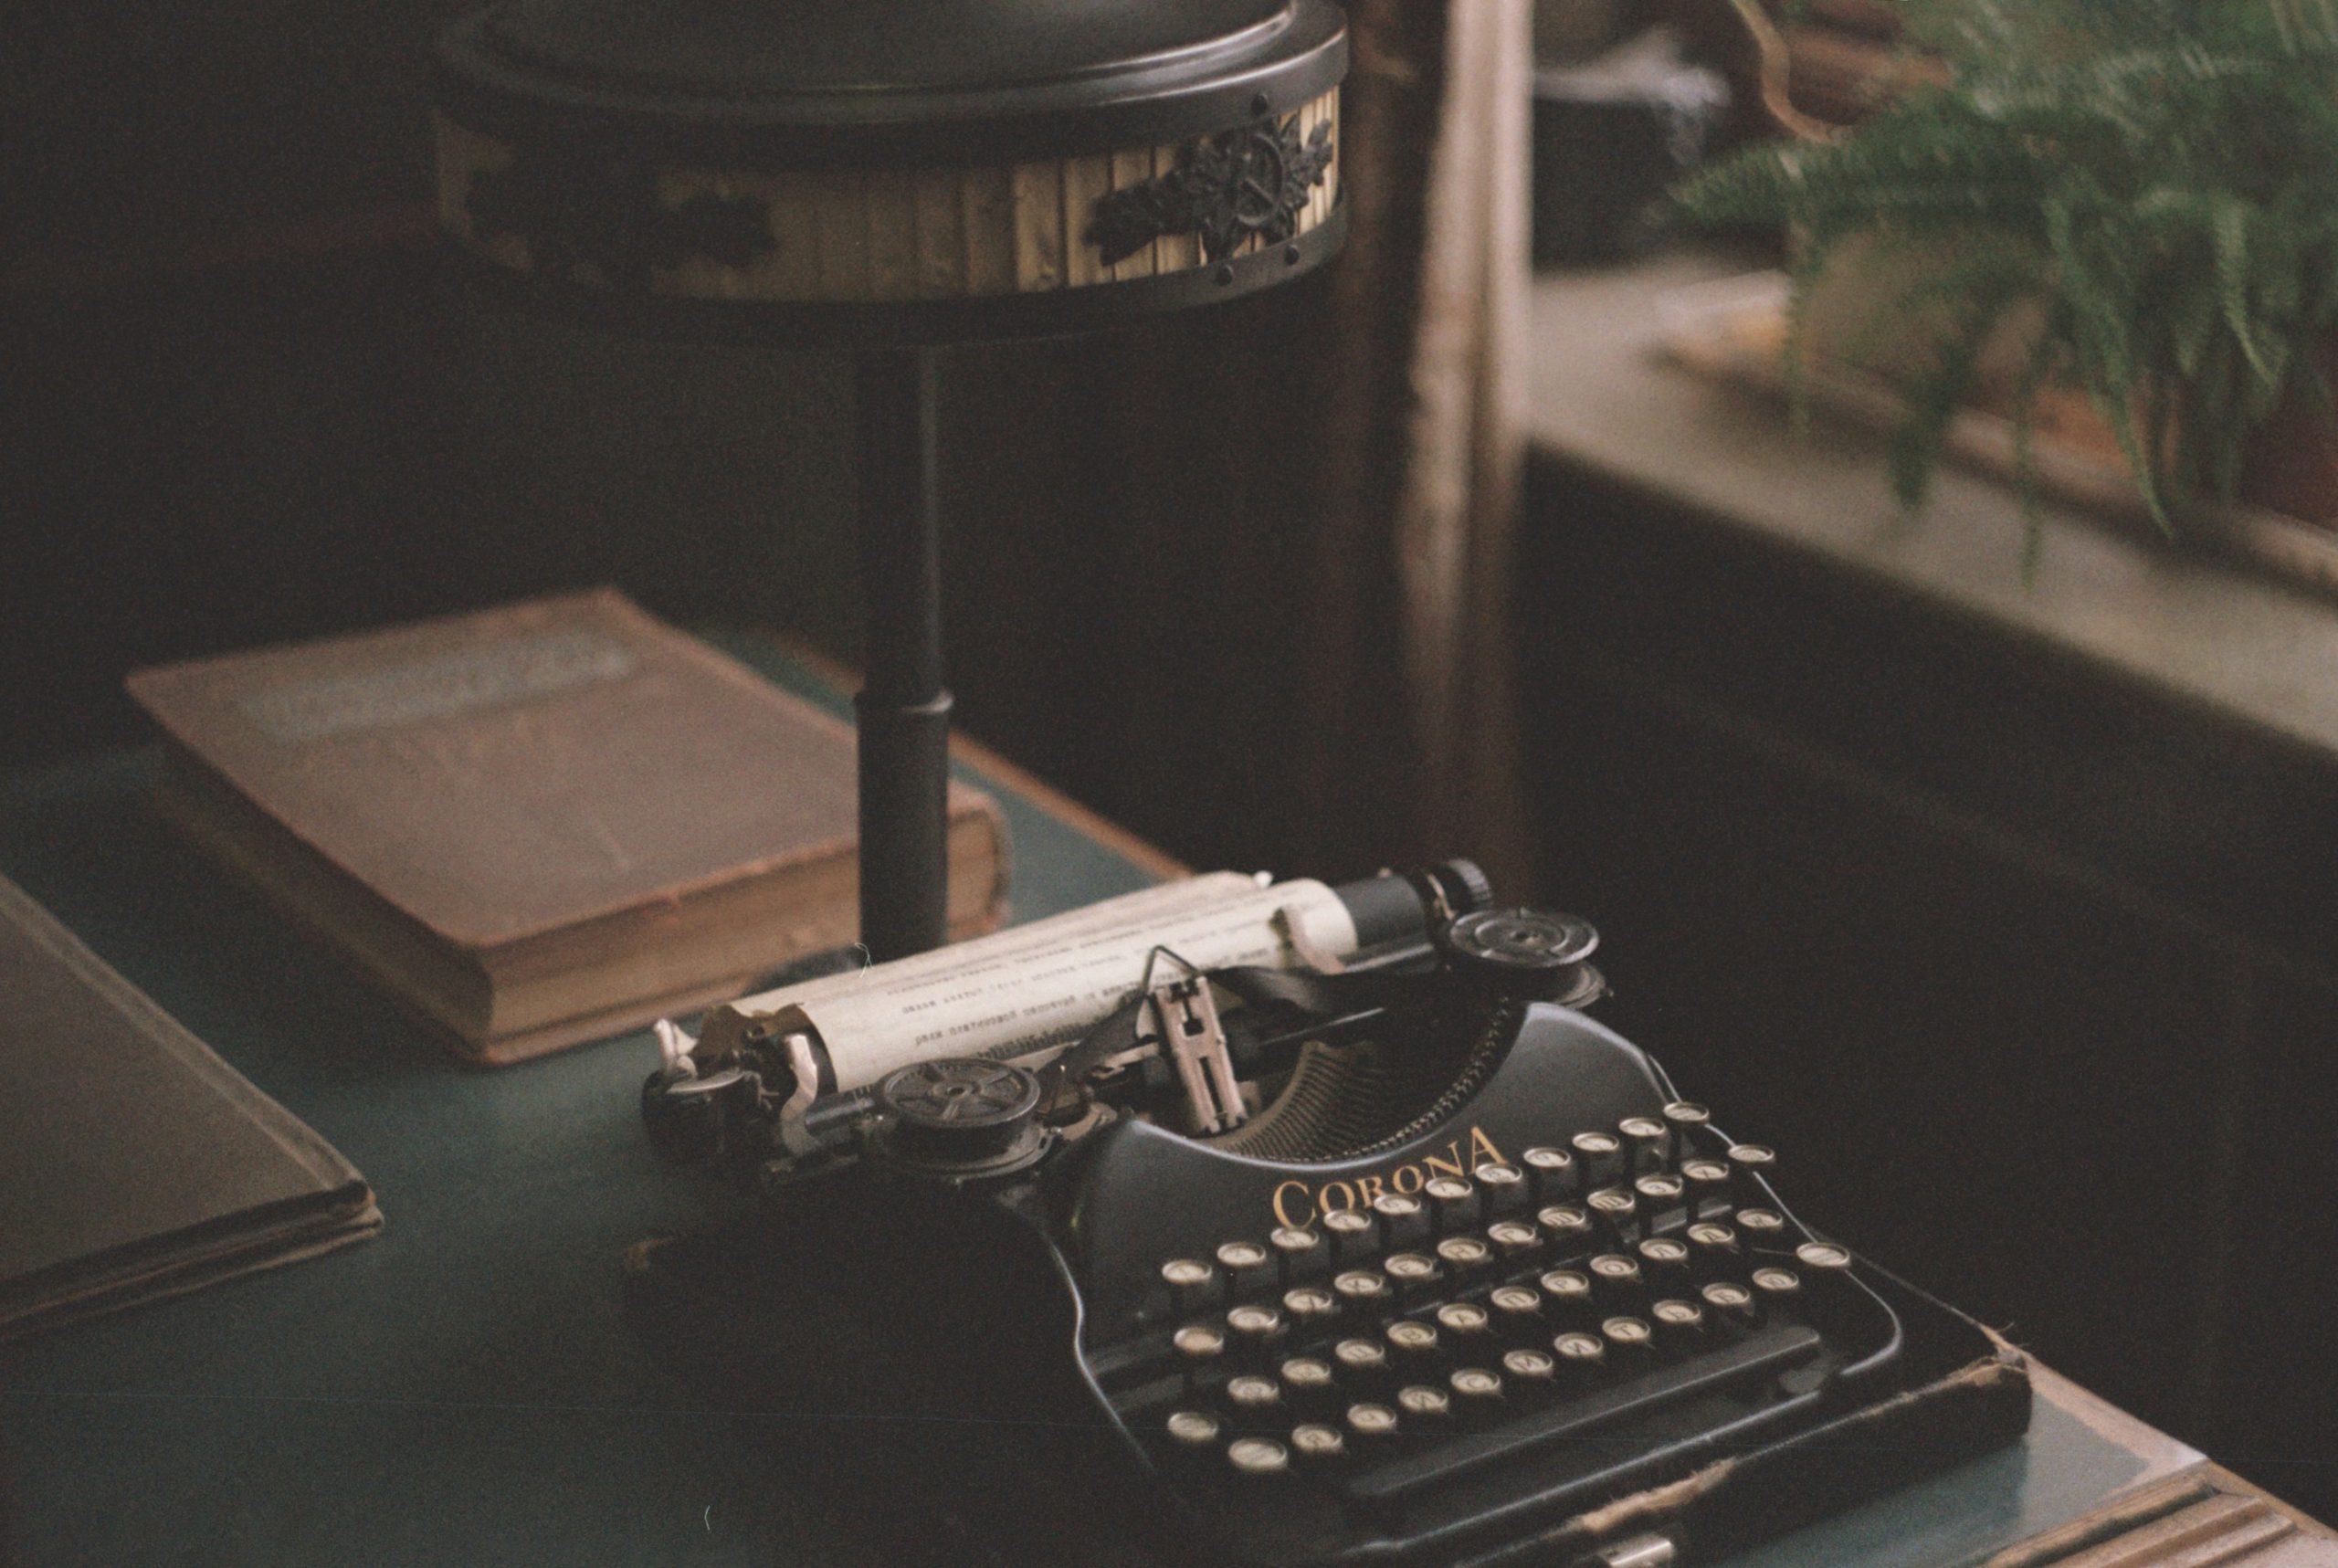 A typewriter sitting on a desk